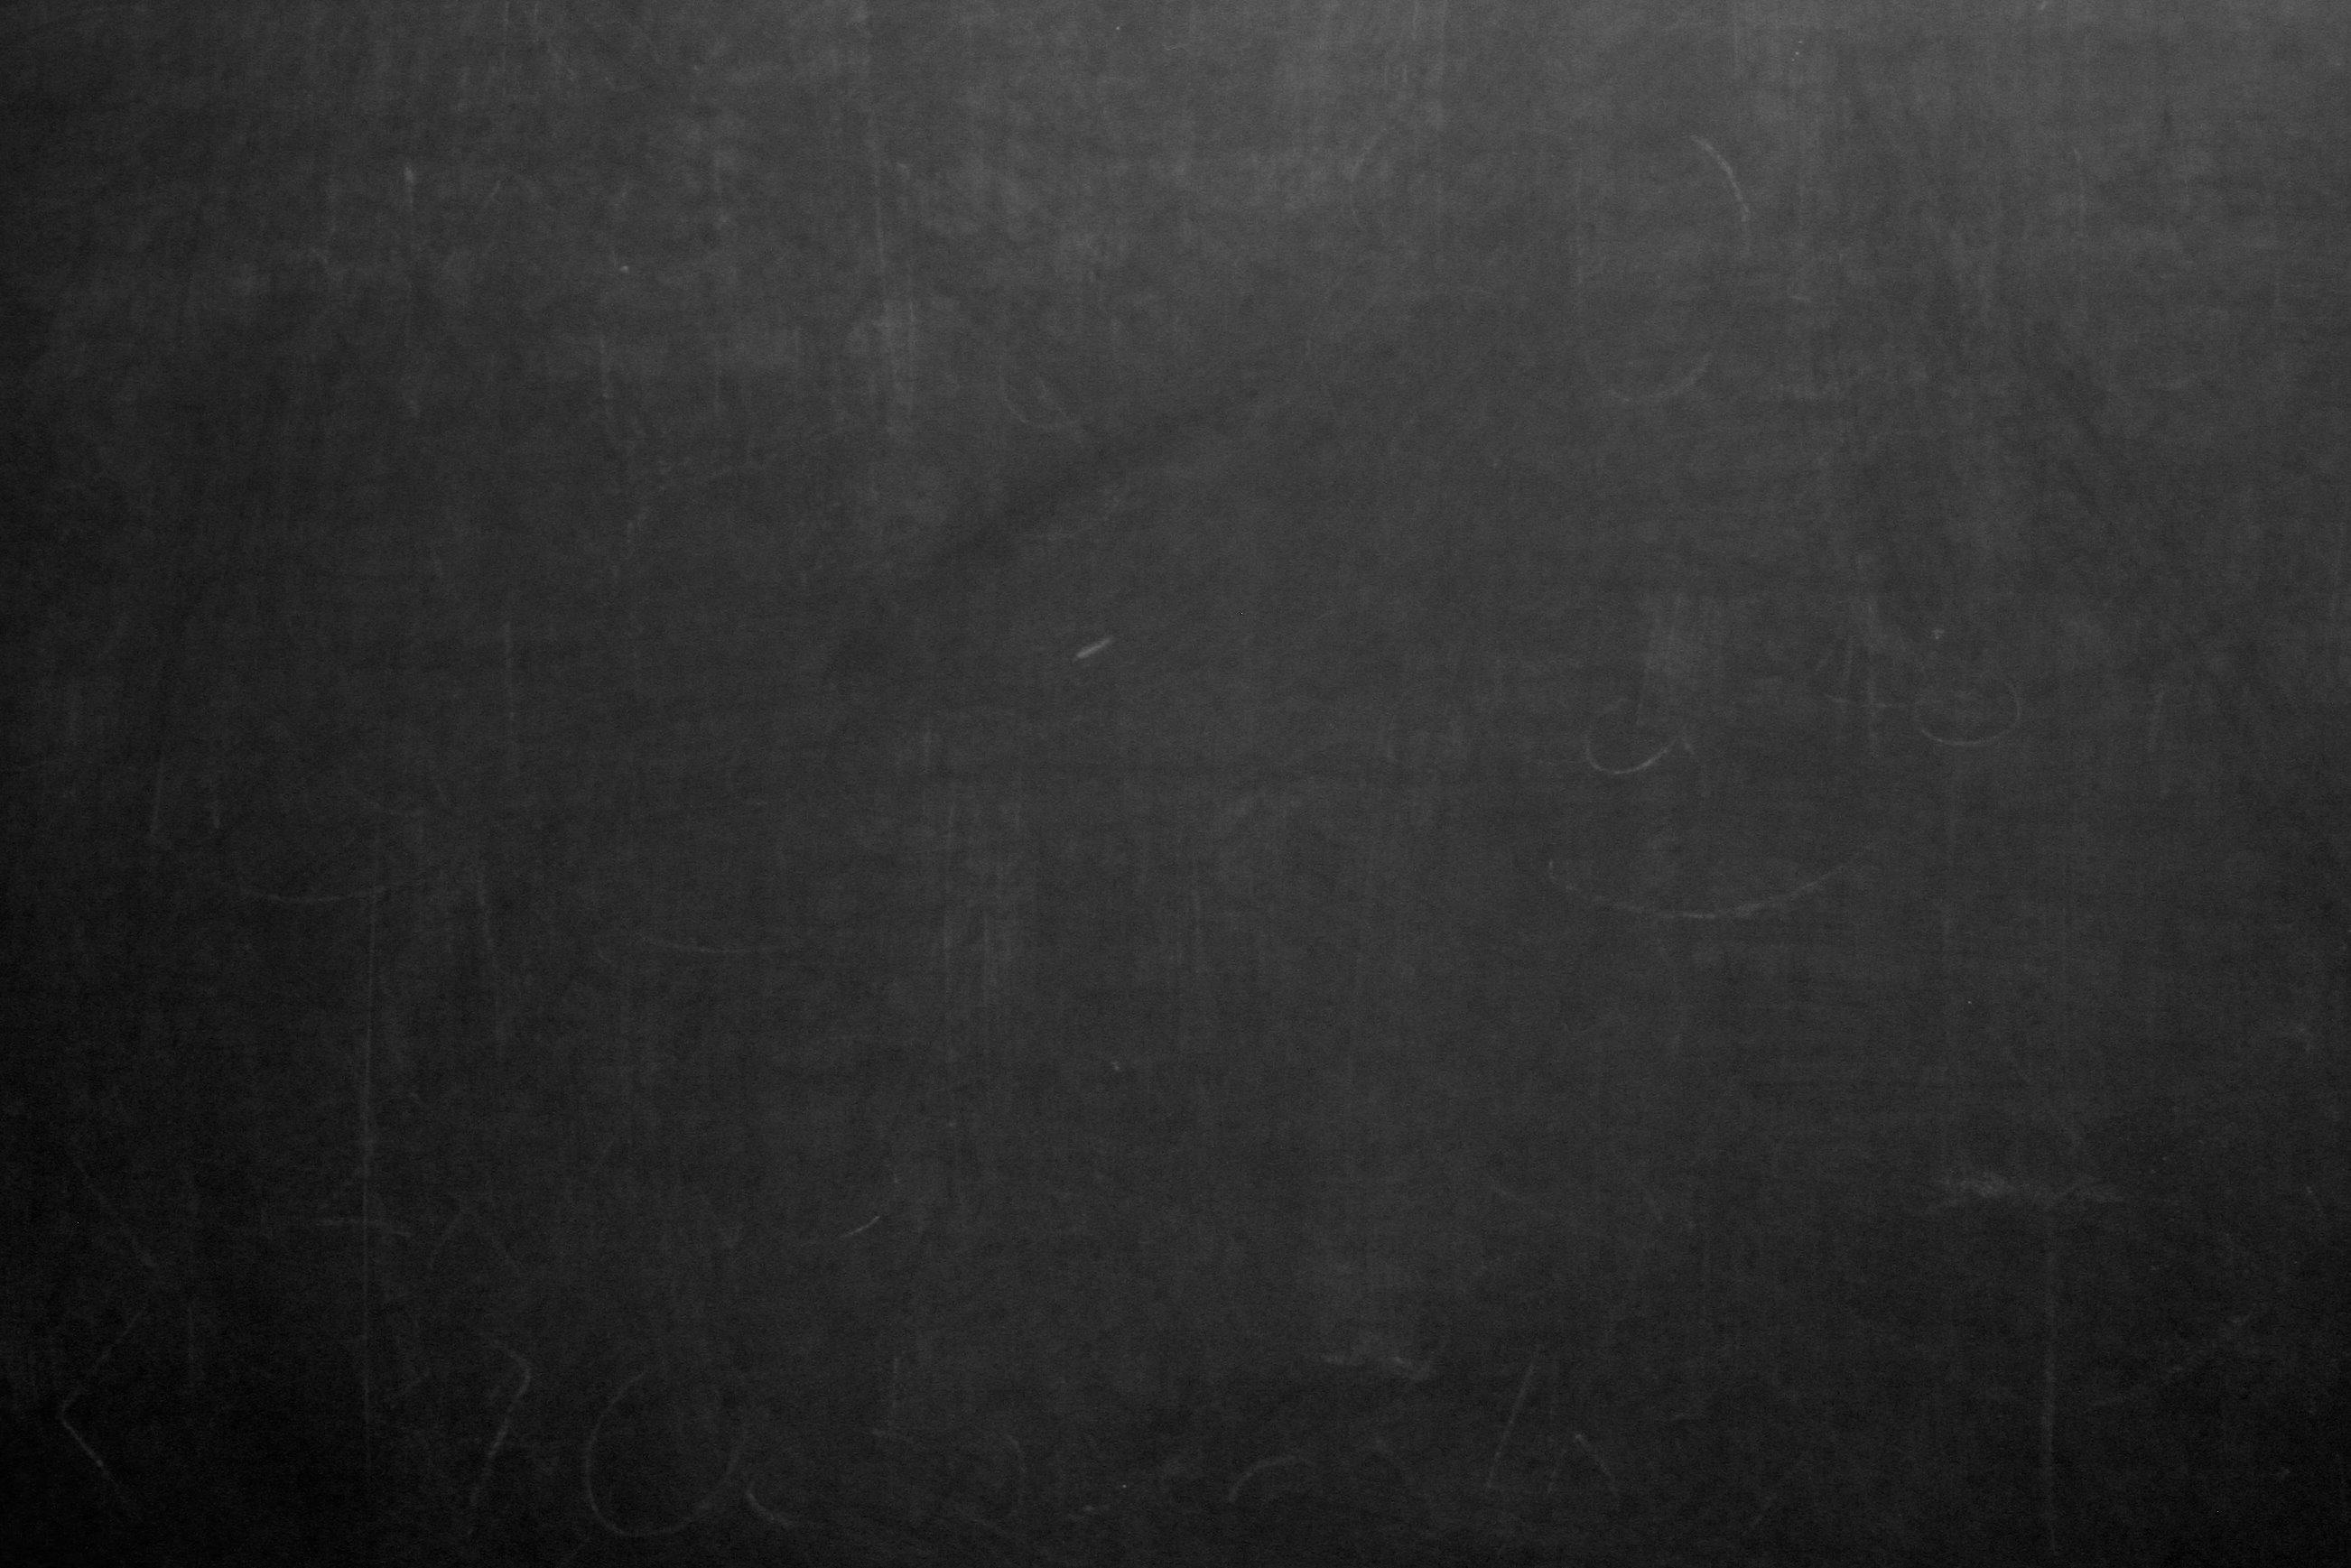 Chalkboard Photo Image PPT Backgrounds